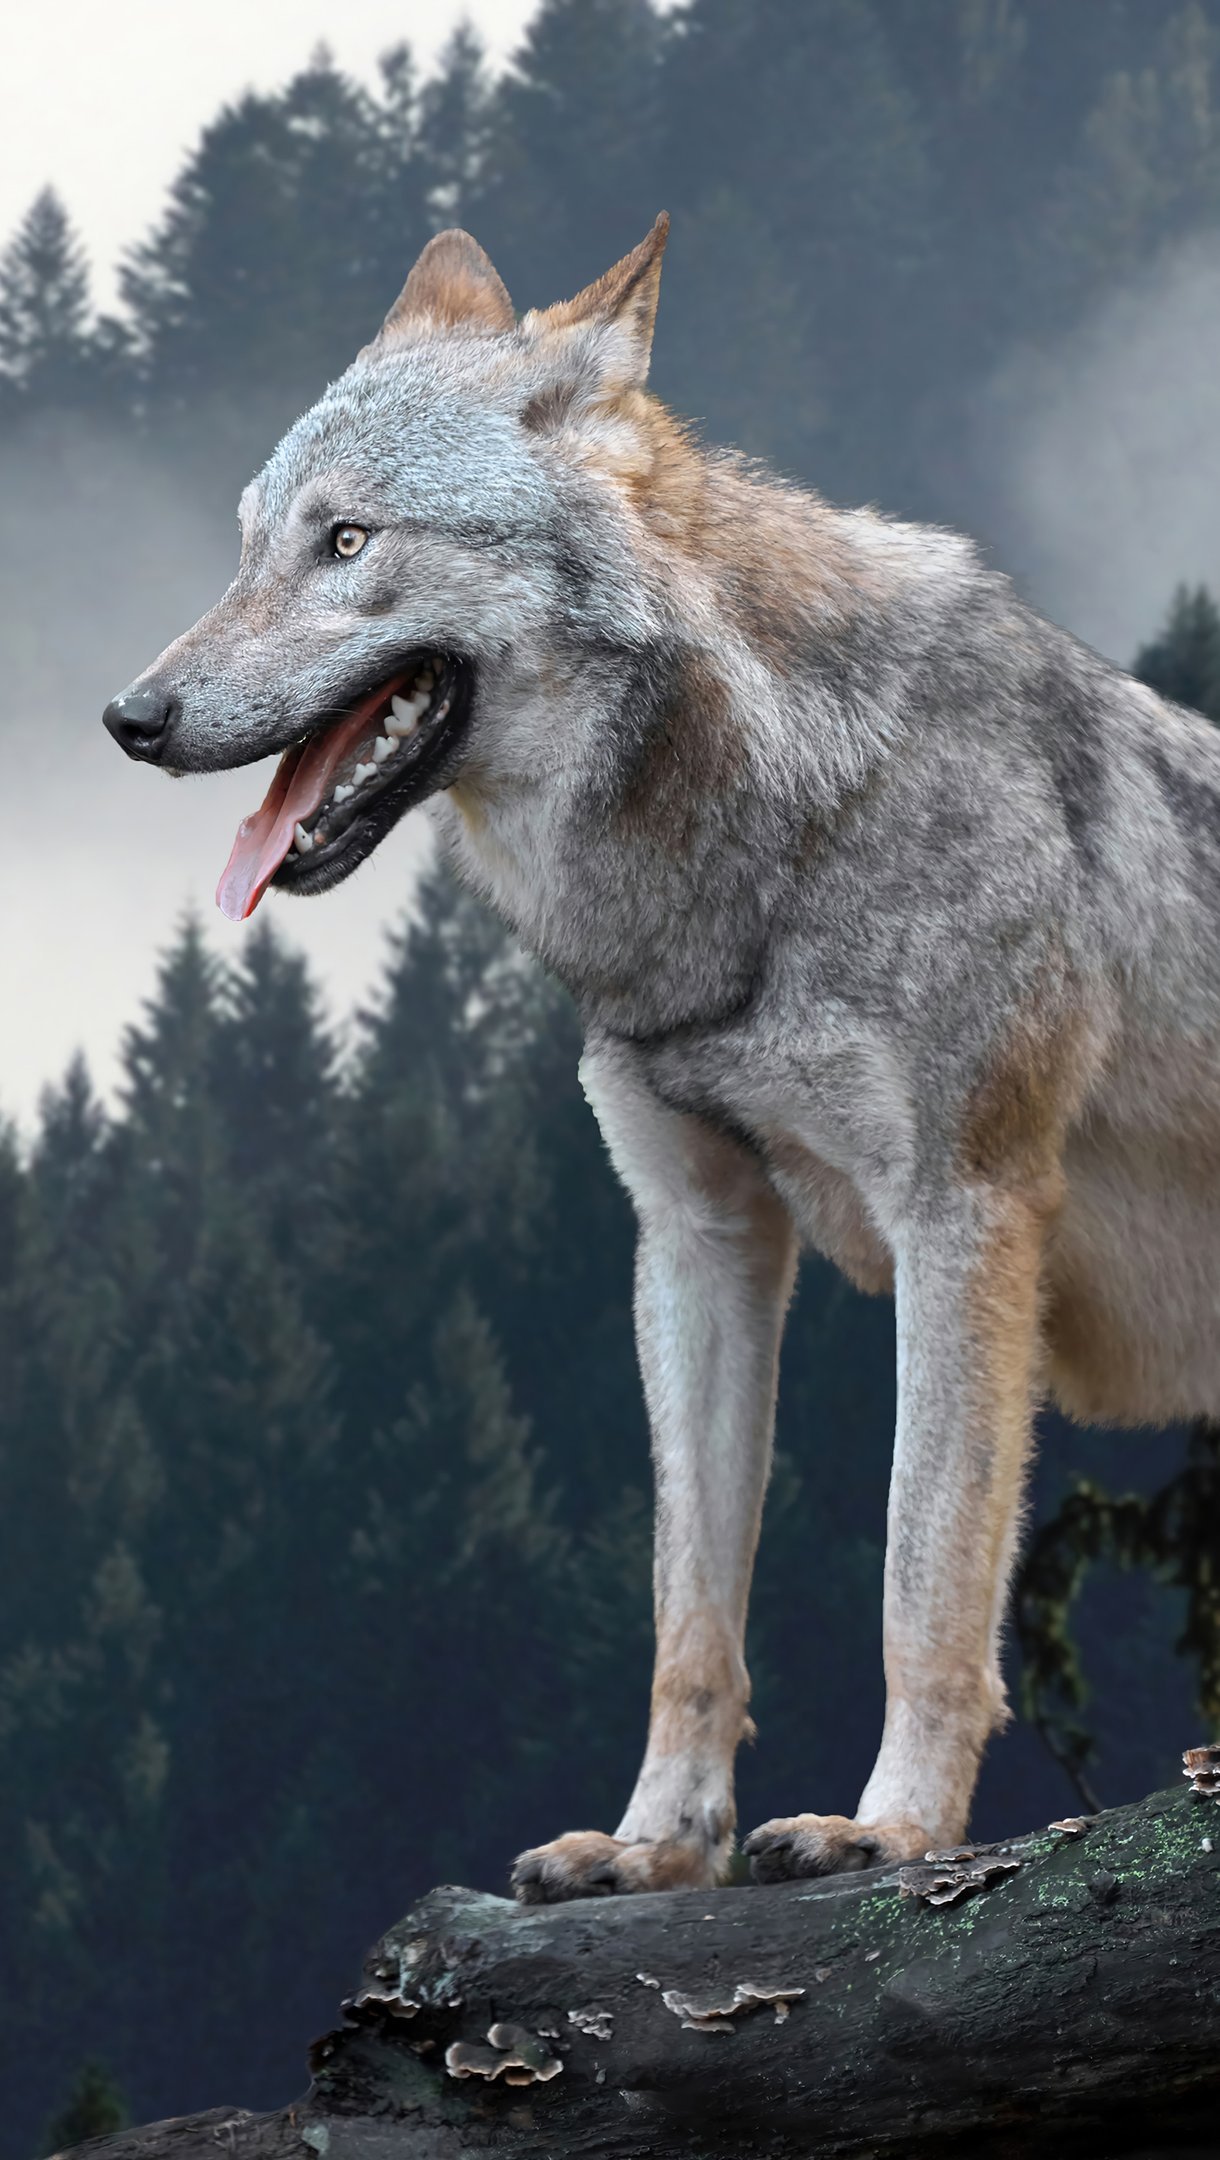 Wolf on rock in the forest Wallpaper 4k Ultra HD ID:9456